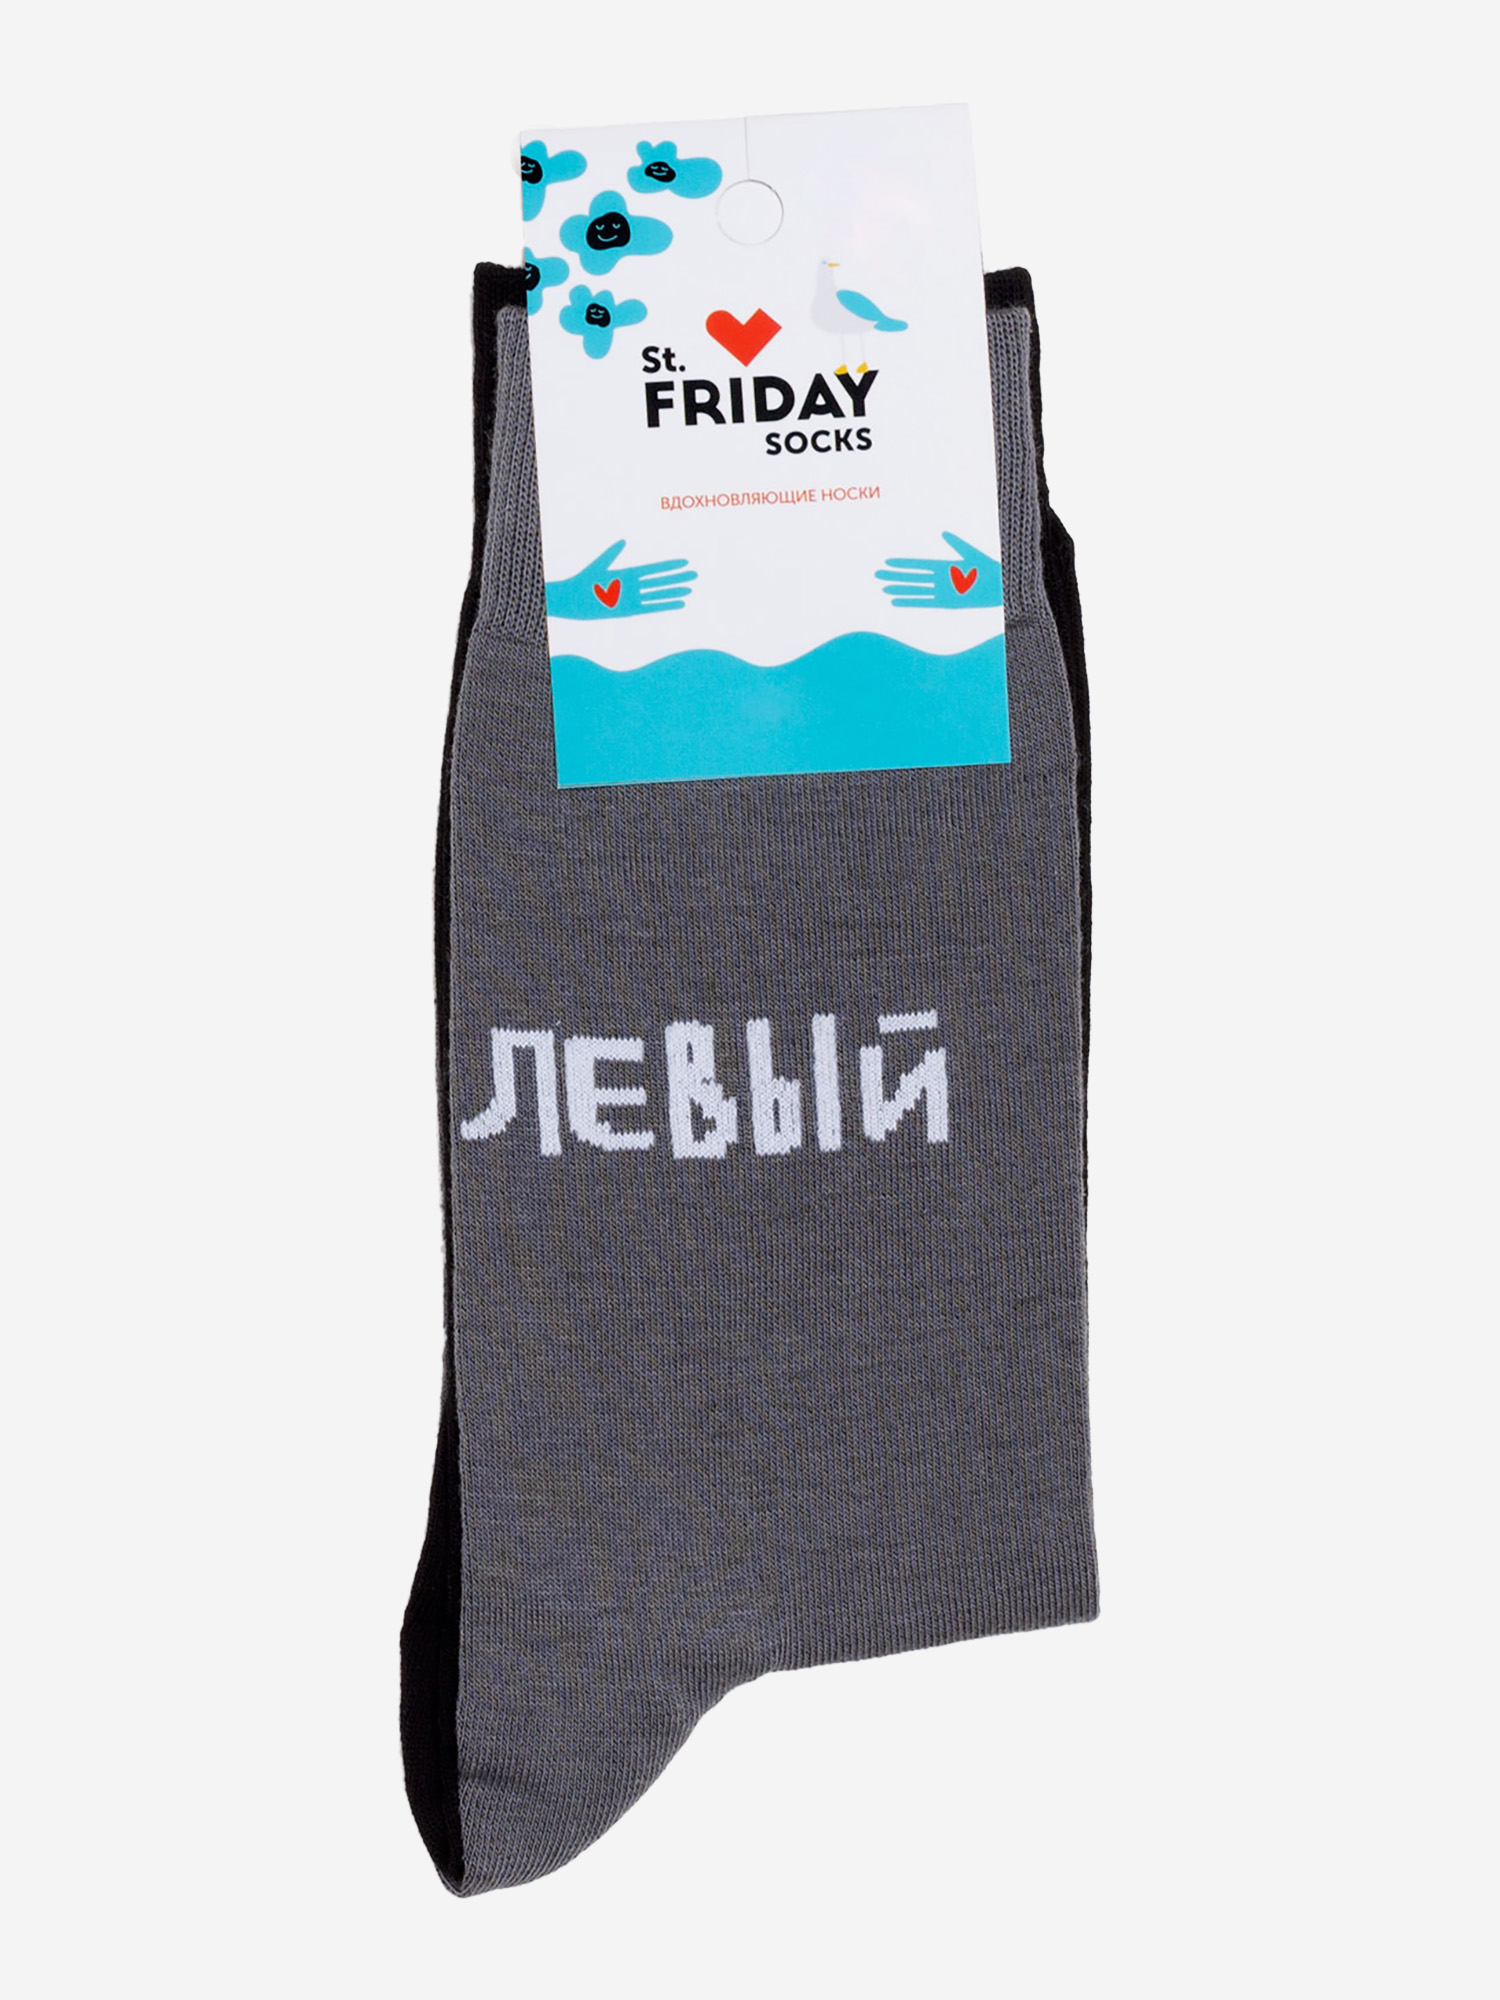 Носки с рисунками St.Friday Socks - Левый, Левый, Серый носки с рисунками st friday socks левый левый серый